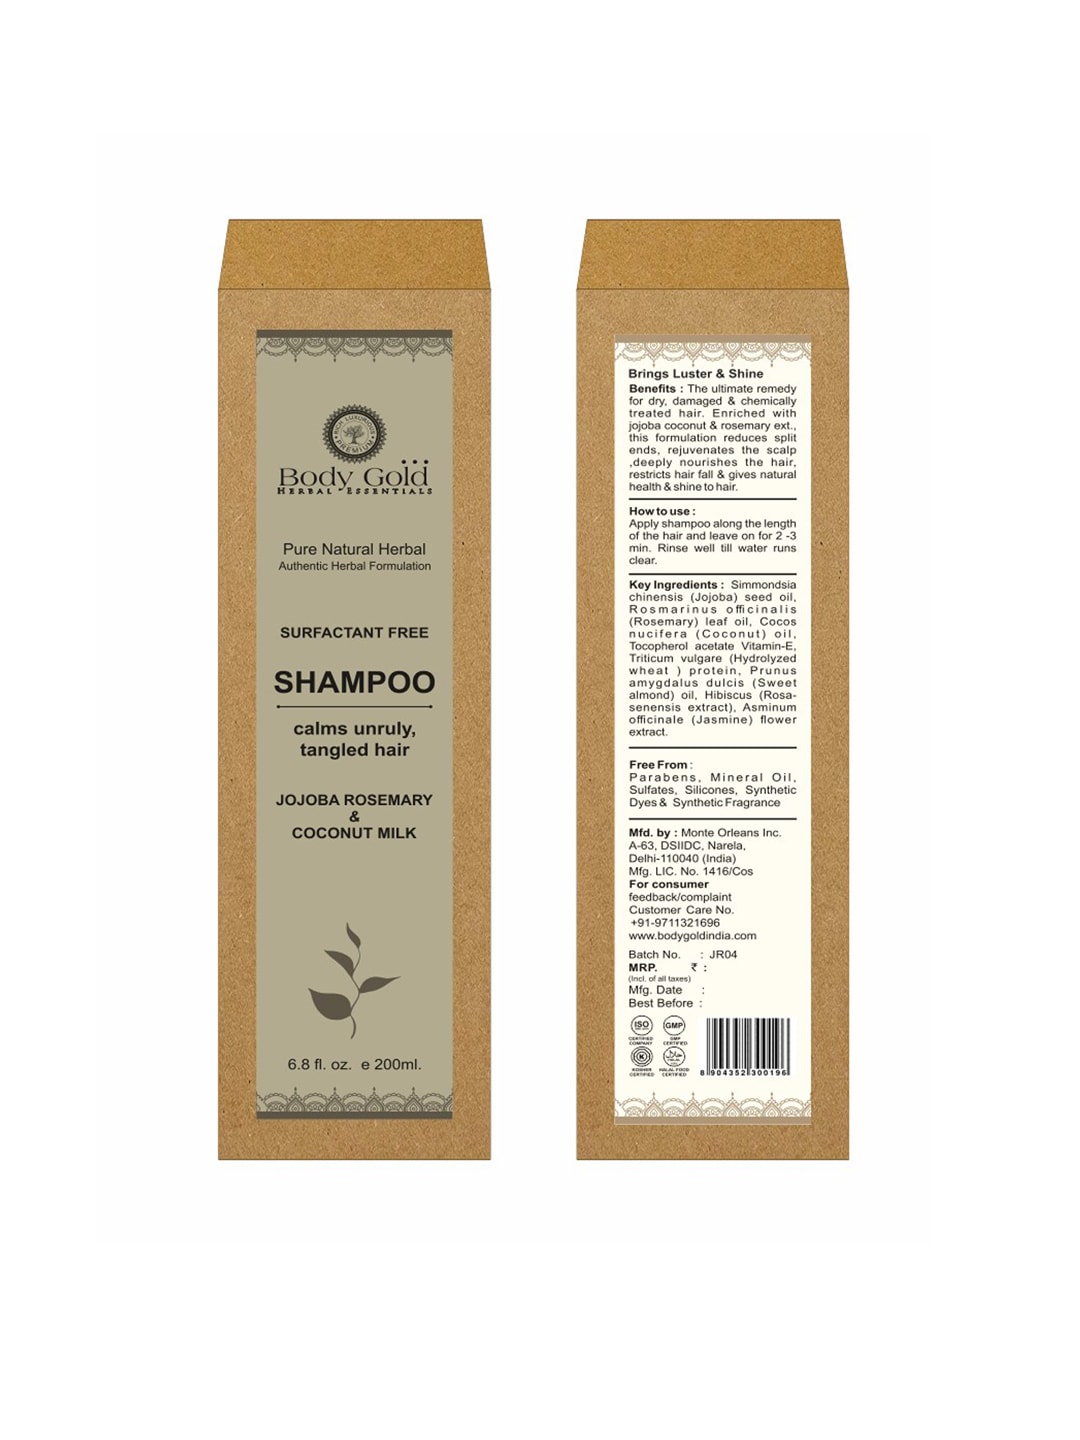 Body Gold Jojoba Rosemary & Coconut Milk Hair Shampoo 200 ml Price in India